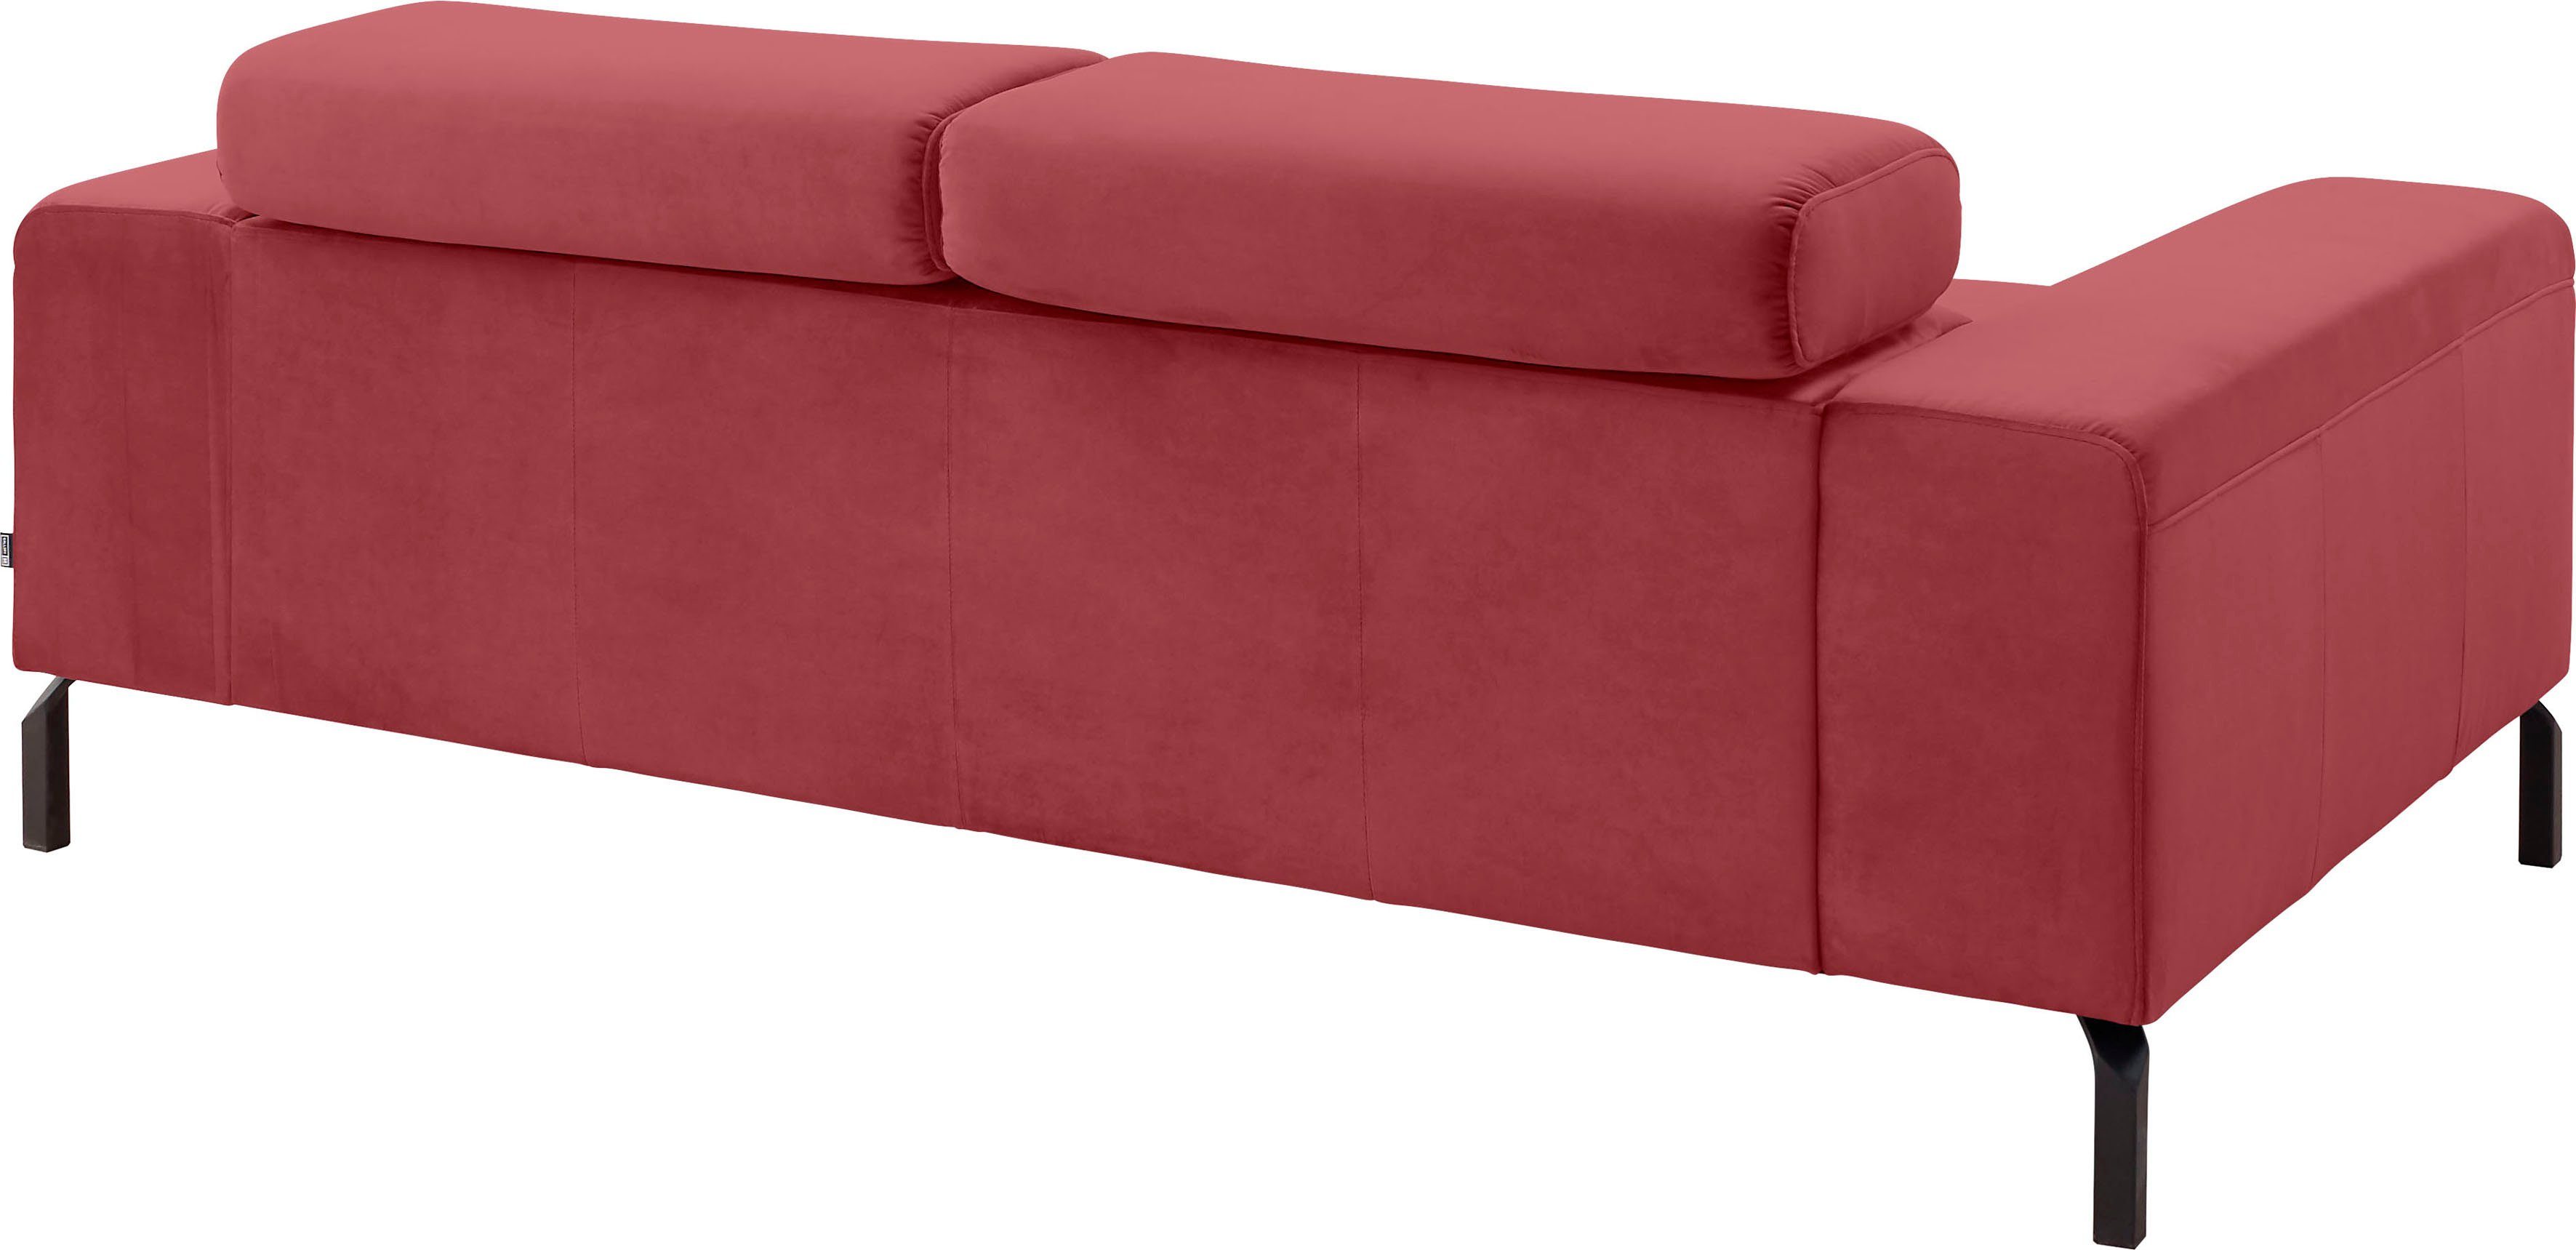 Musterring 2-Sitzer Felicia red Sitzvorzug, branded inklusive by Due, Wahlweise Kopfteilverstellung GALLERY mit M